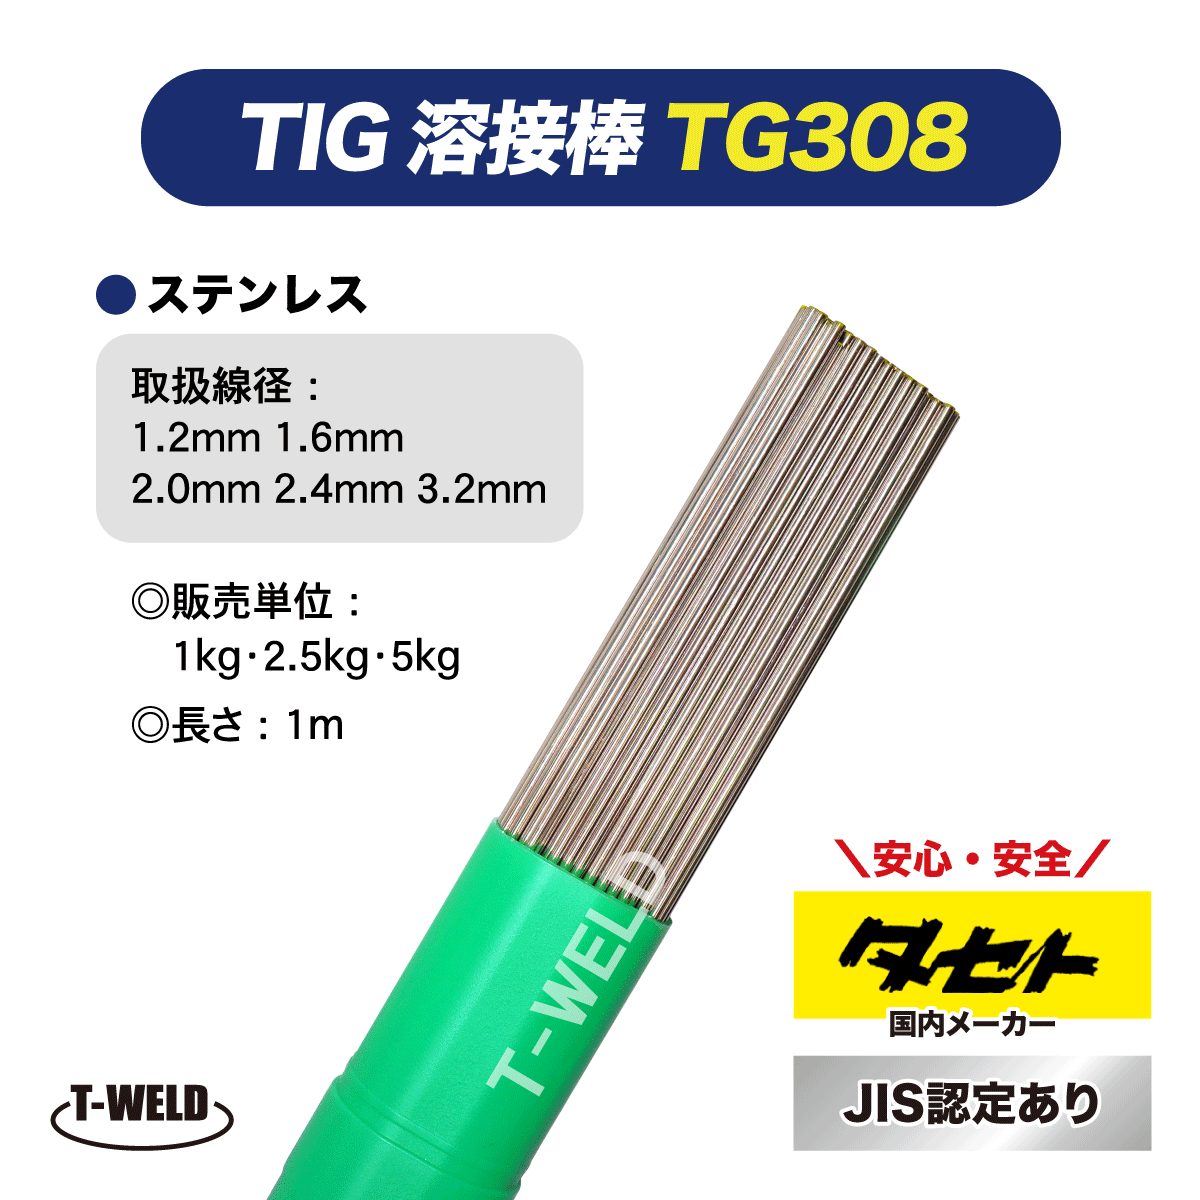 JIS recognition tasetoTIG stainless steel welding stick TG308 3.2mm×1m 2.5kg